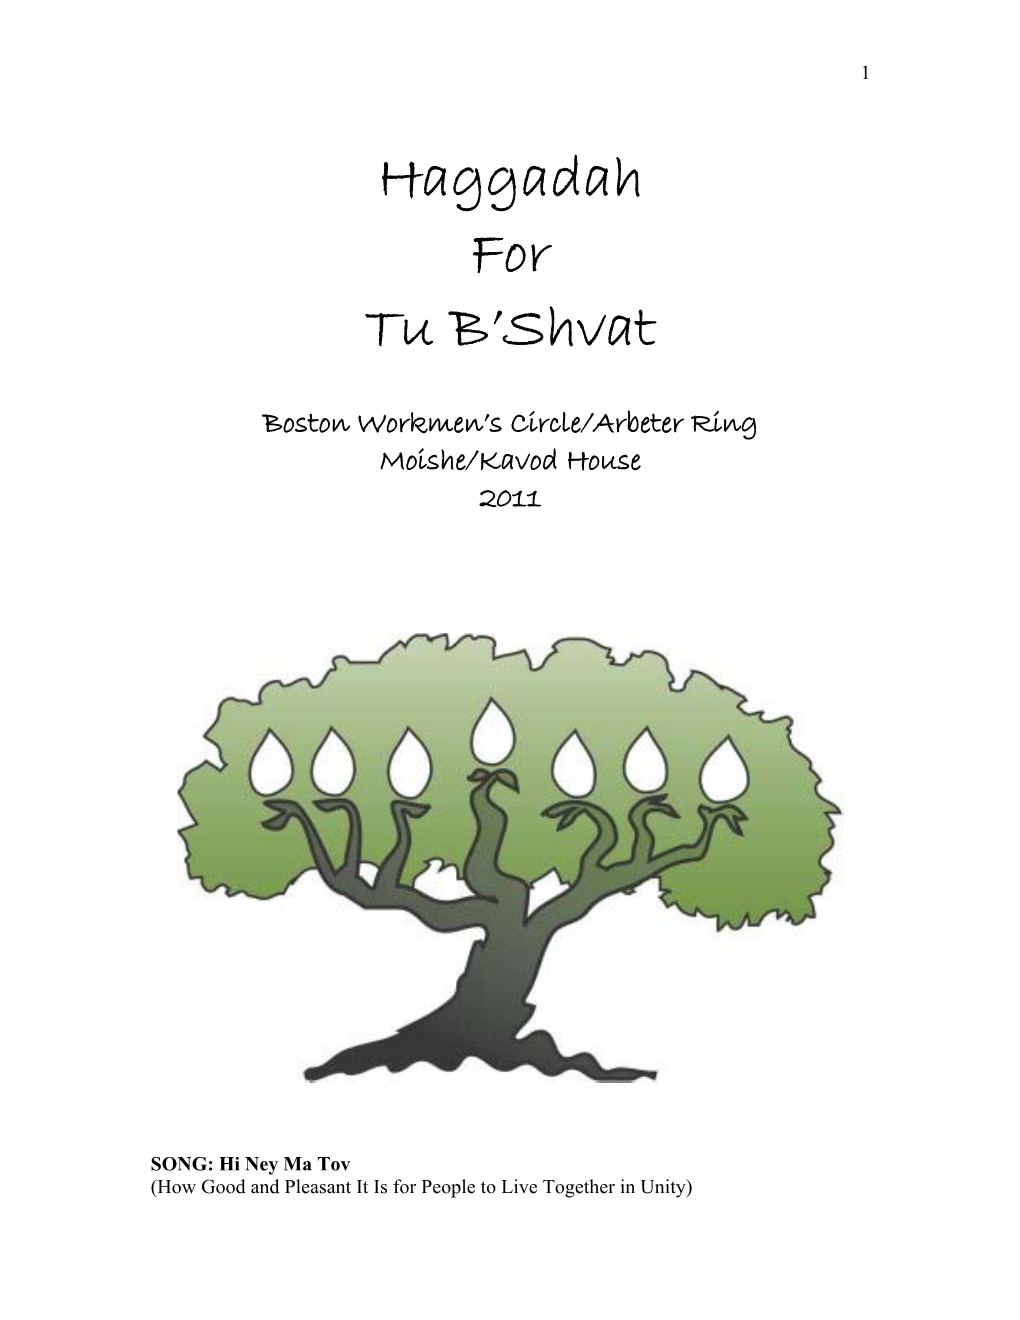 Haggadah for Tu B'shvat